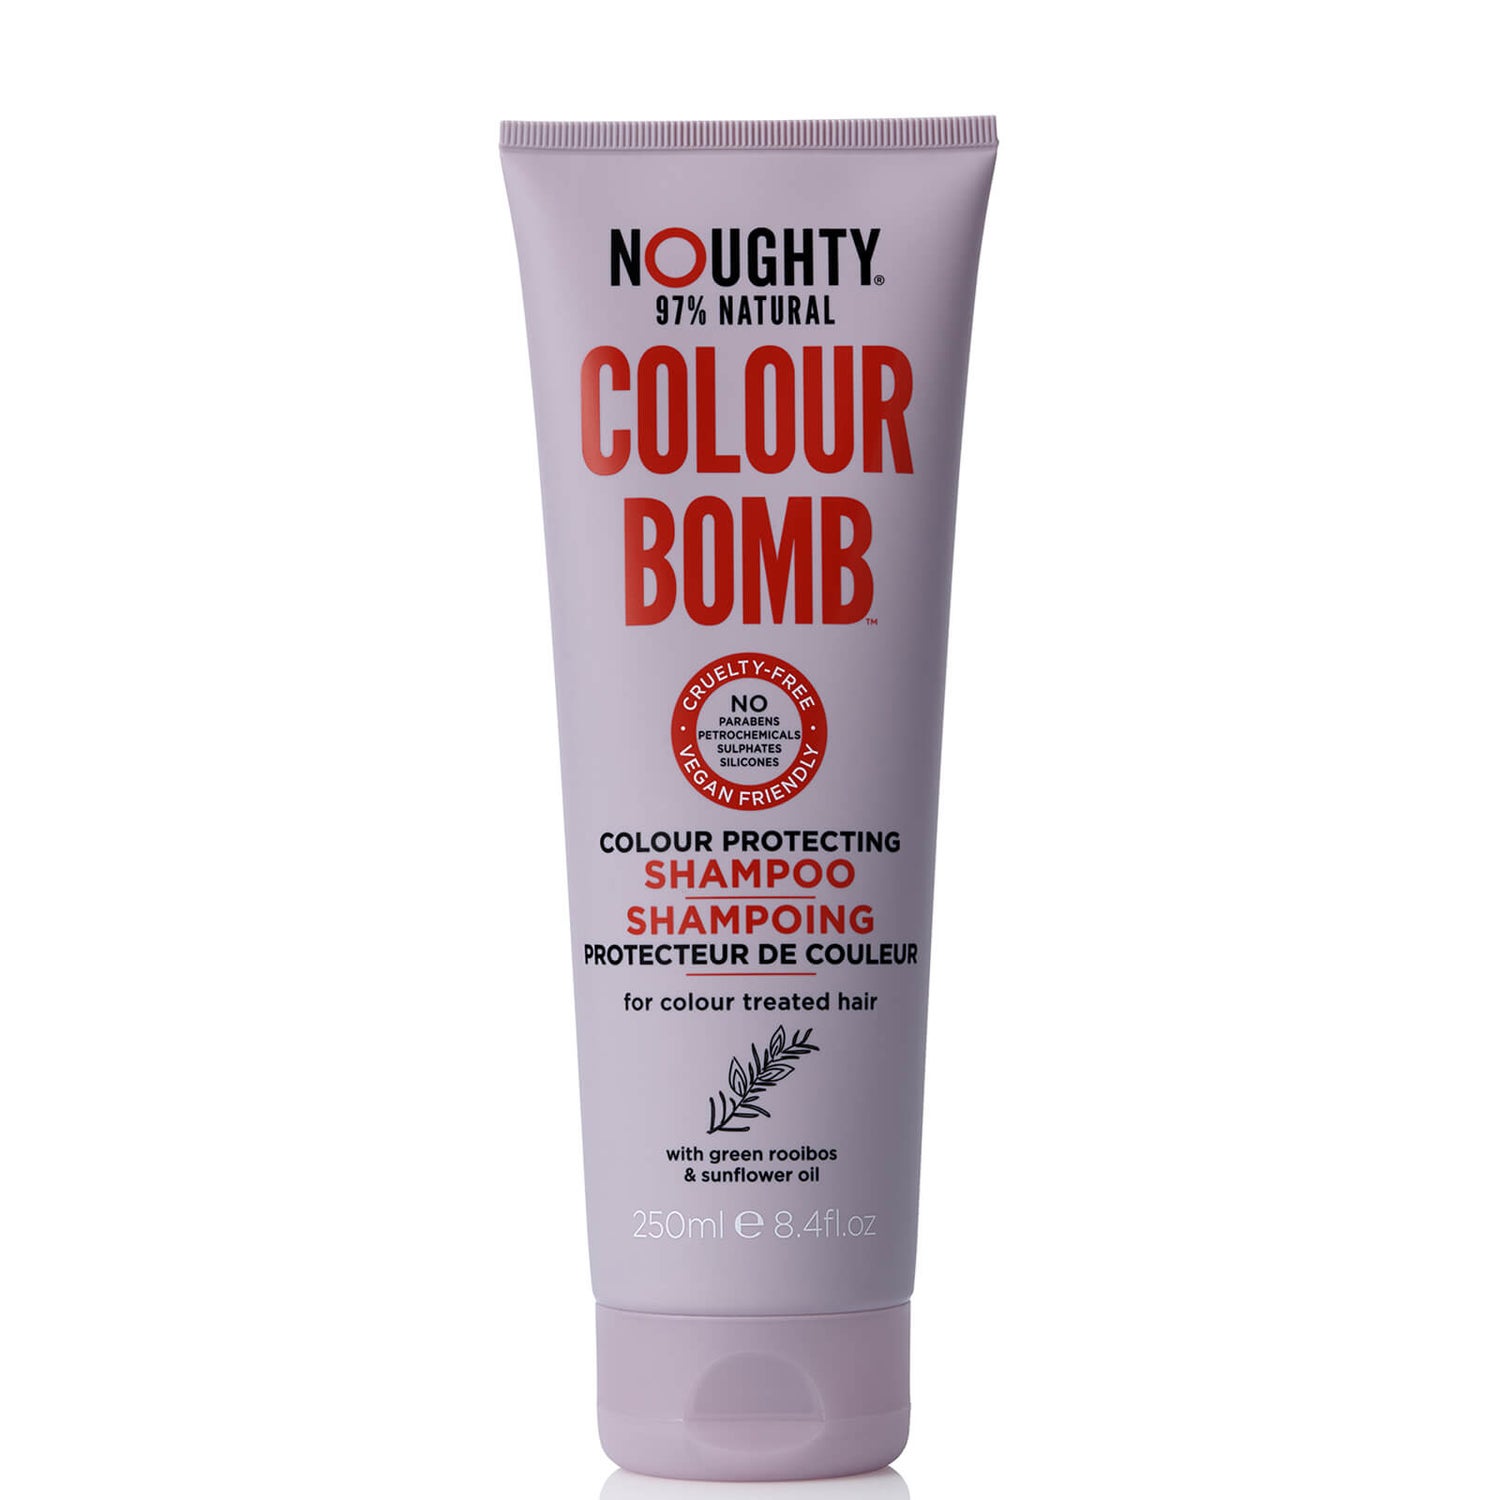 Noughty Colour Bomb Colour Protecting Shampoo 250ml Free US Shipping | lookfantastic